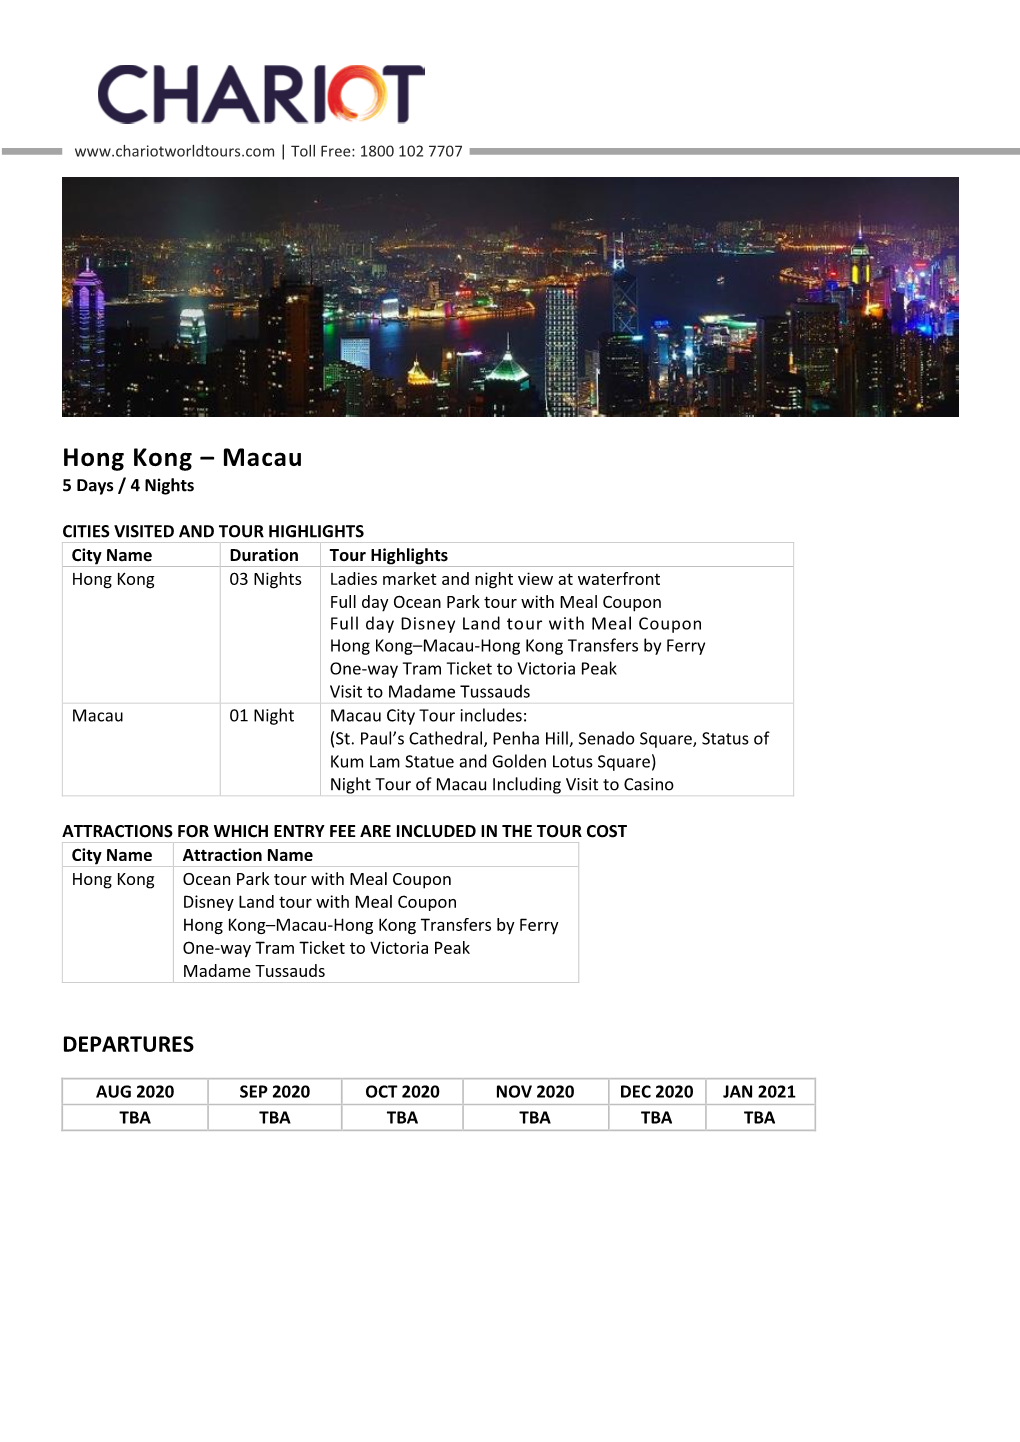 Hong Kong – Macau 5 Days / 4 Nights